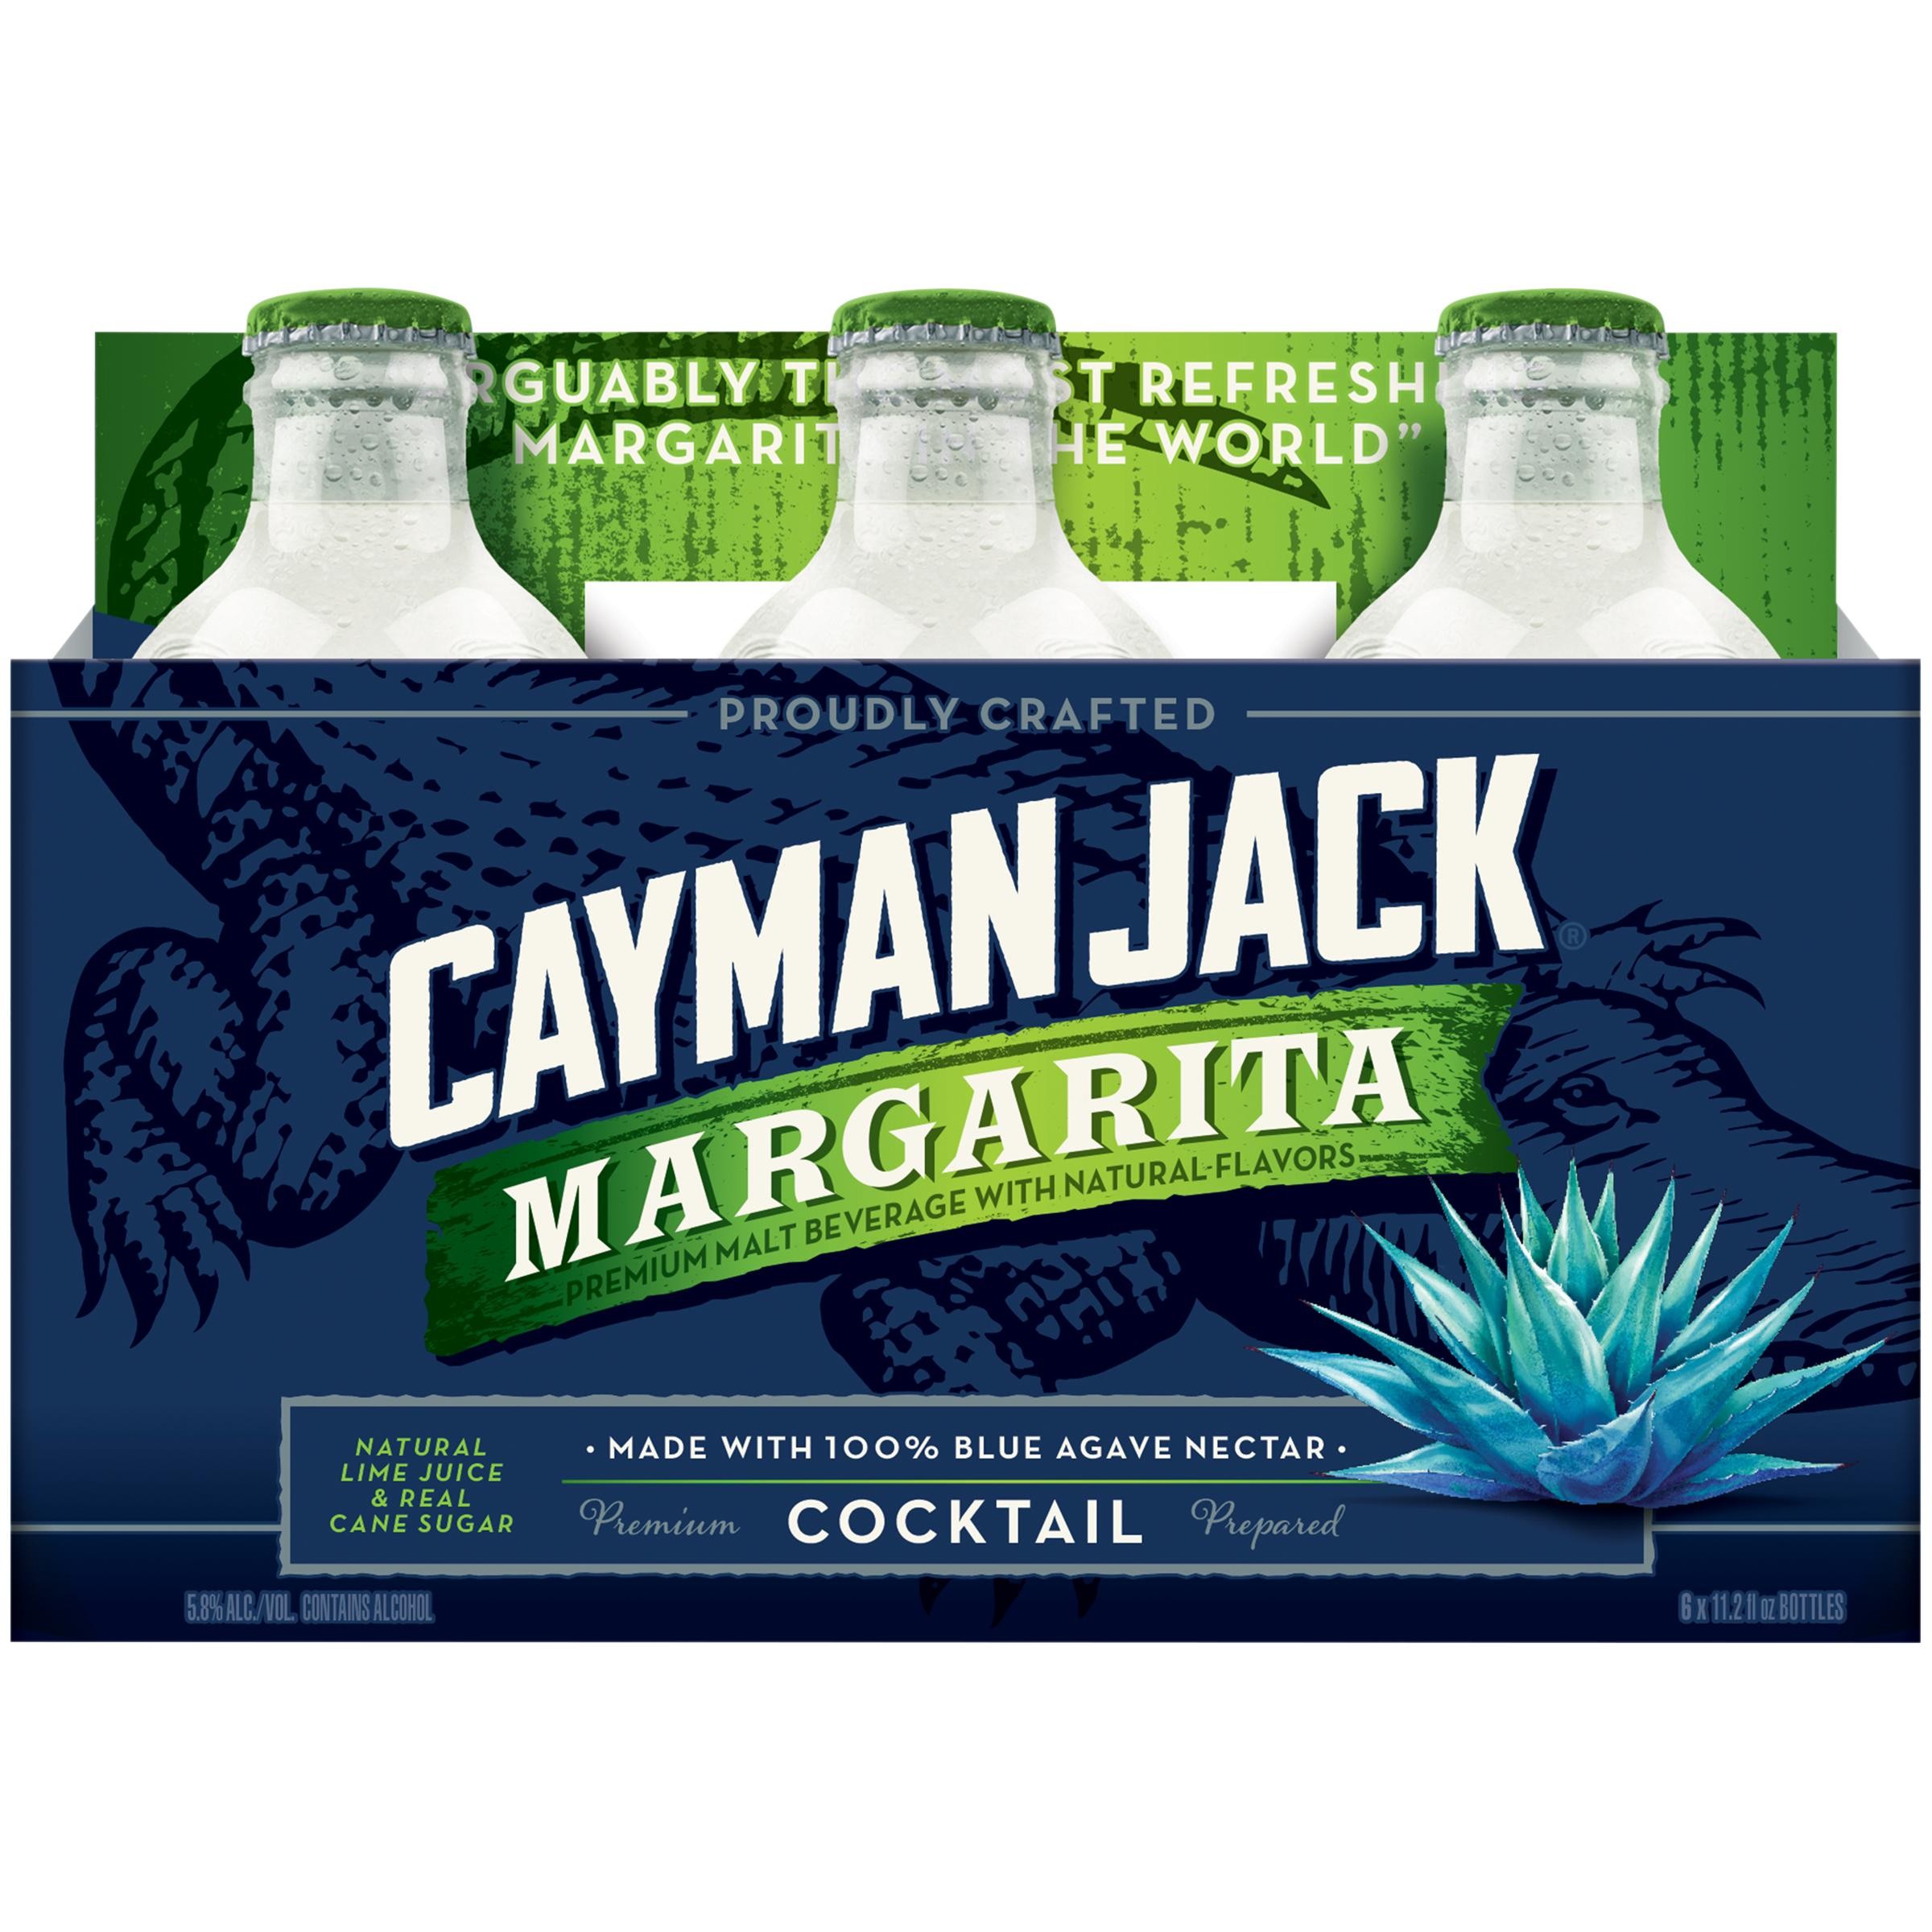 Cayman Jack Margarita Bottles 12oz